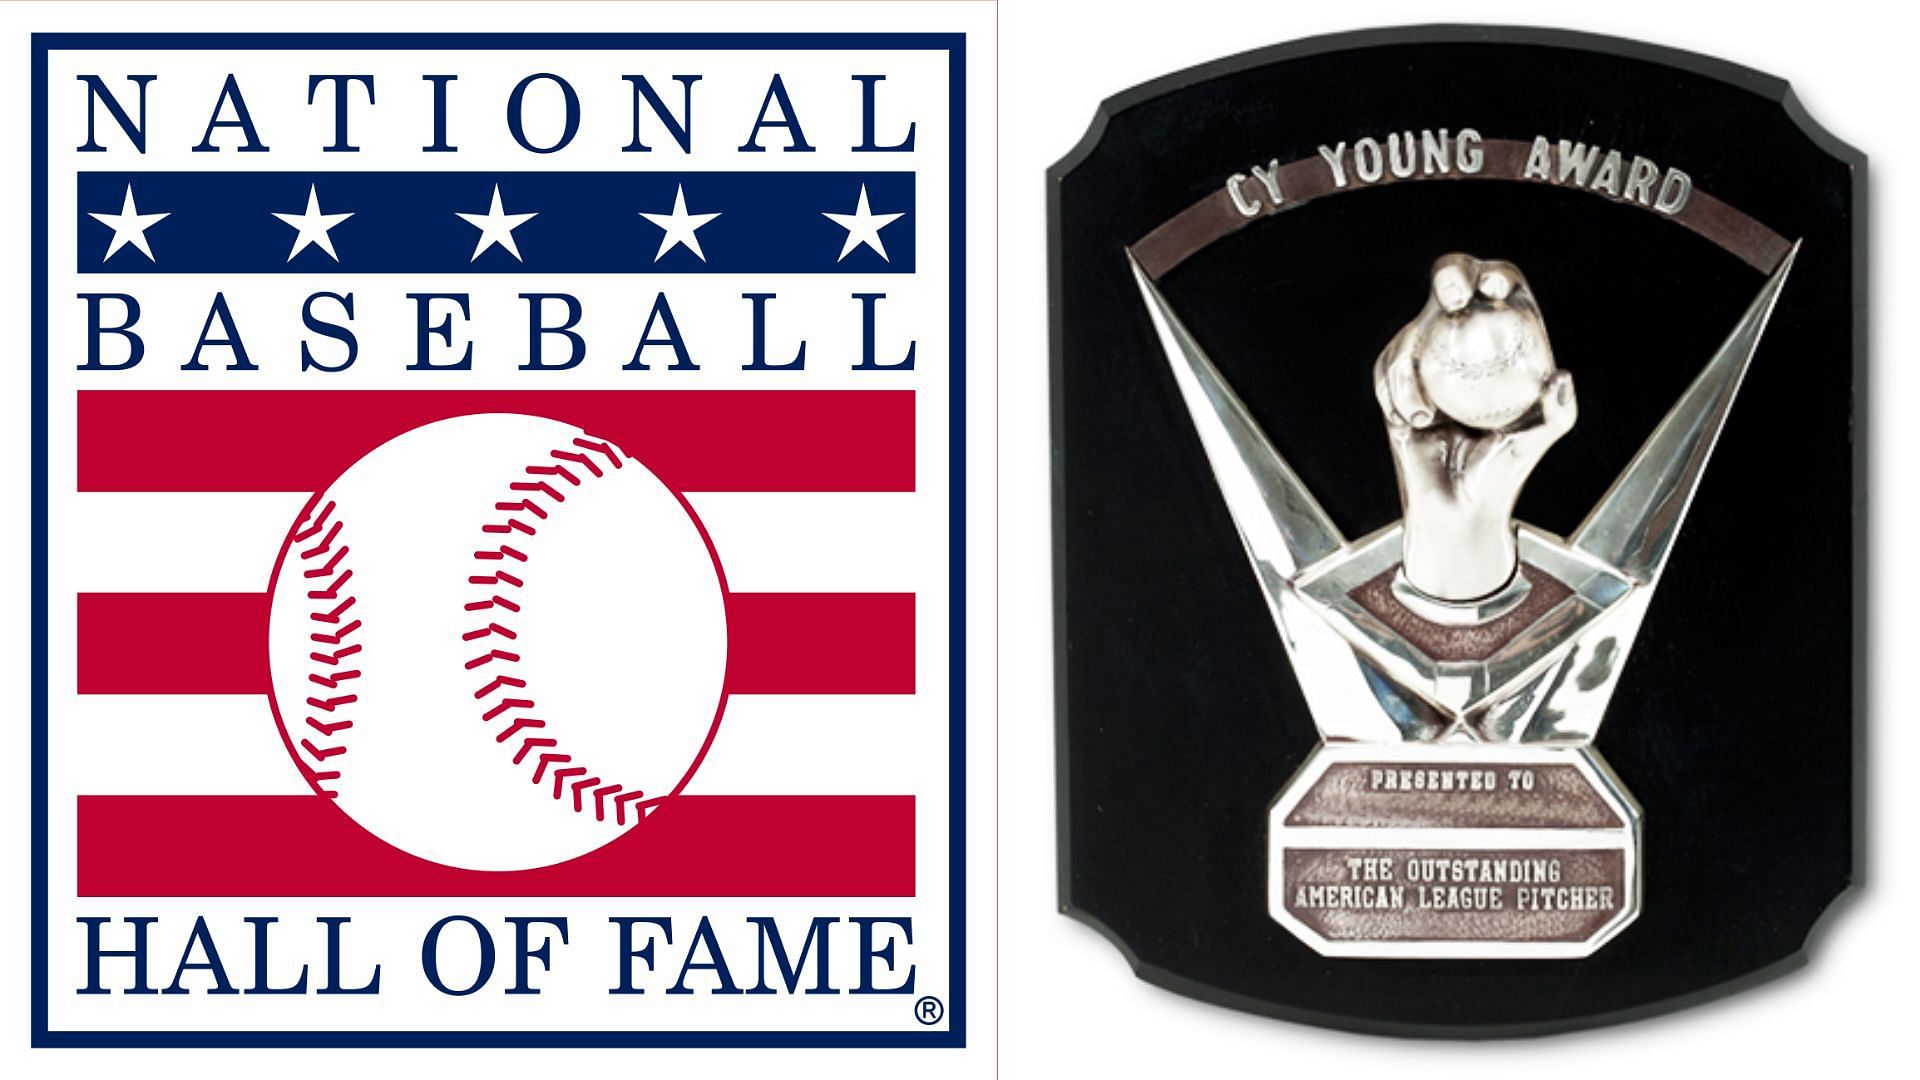 Roy Halladay, MLB Pitcher, Cy Young Award Winner